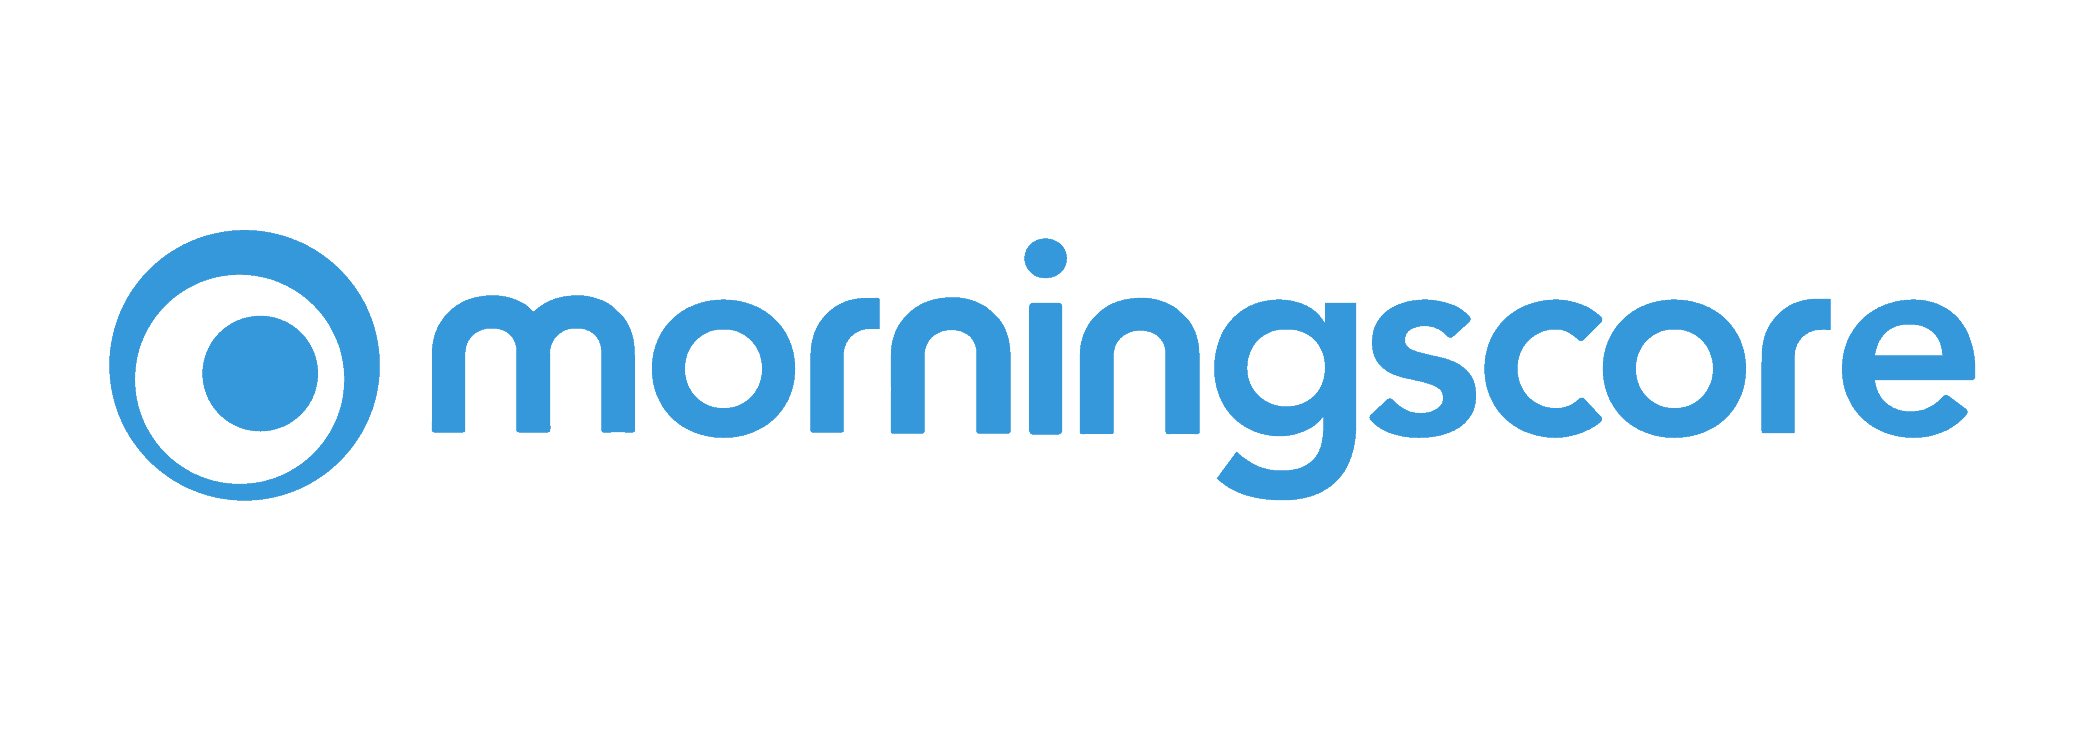 morningscore logo